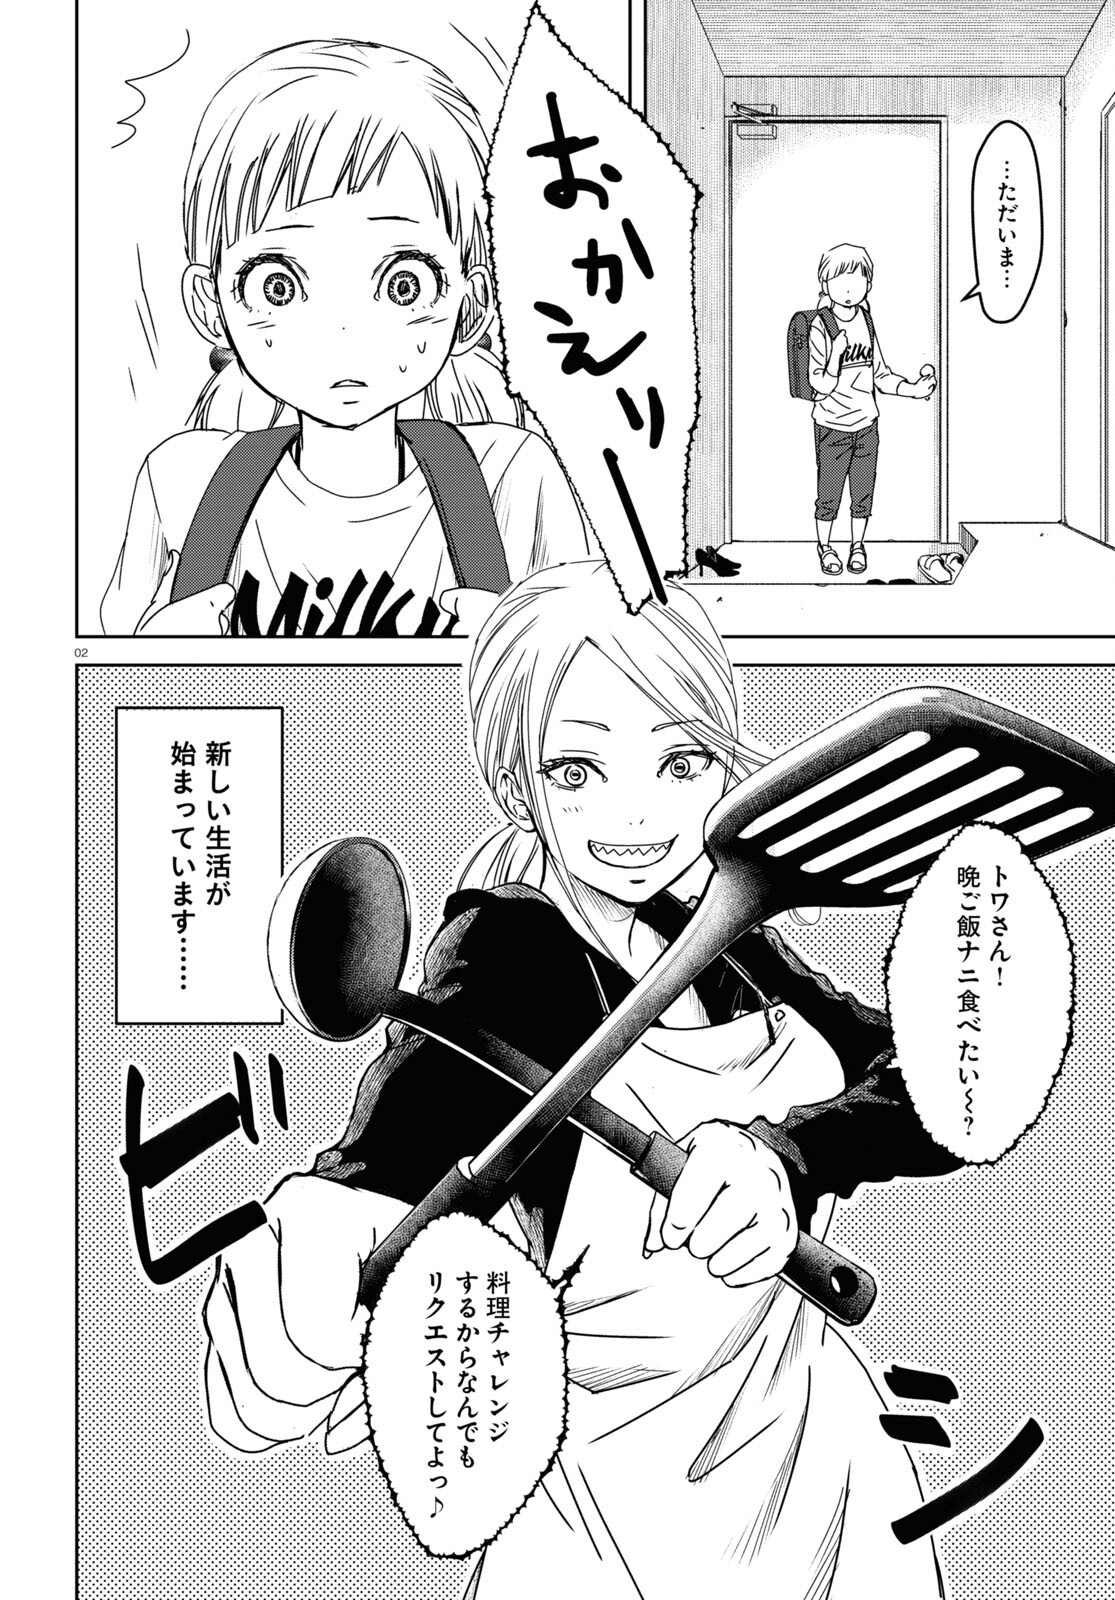 Watashi no Okaa-san (USAYA Mame) - Chapter 3 - Page 2